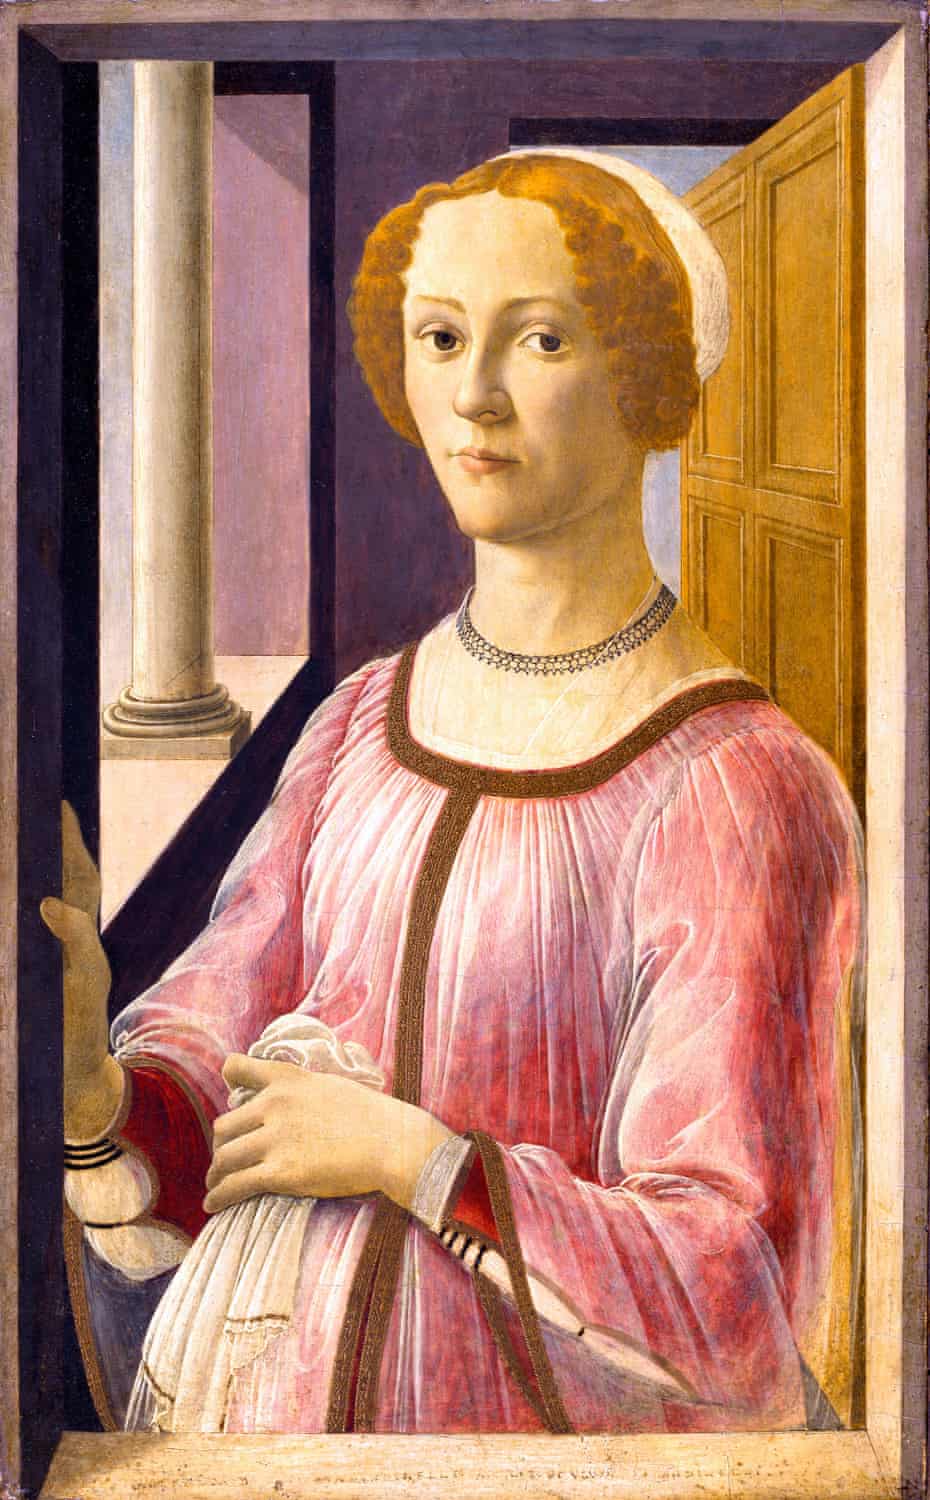 Botticelli’s Portrait of Smeralda Bandinelli, c147l, ‘breaking the frame’.